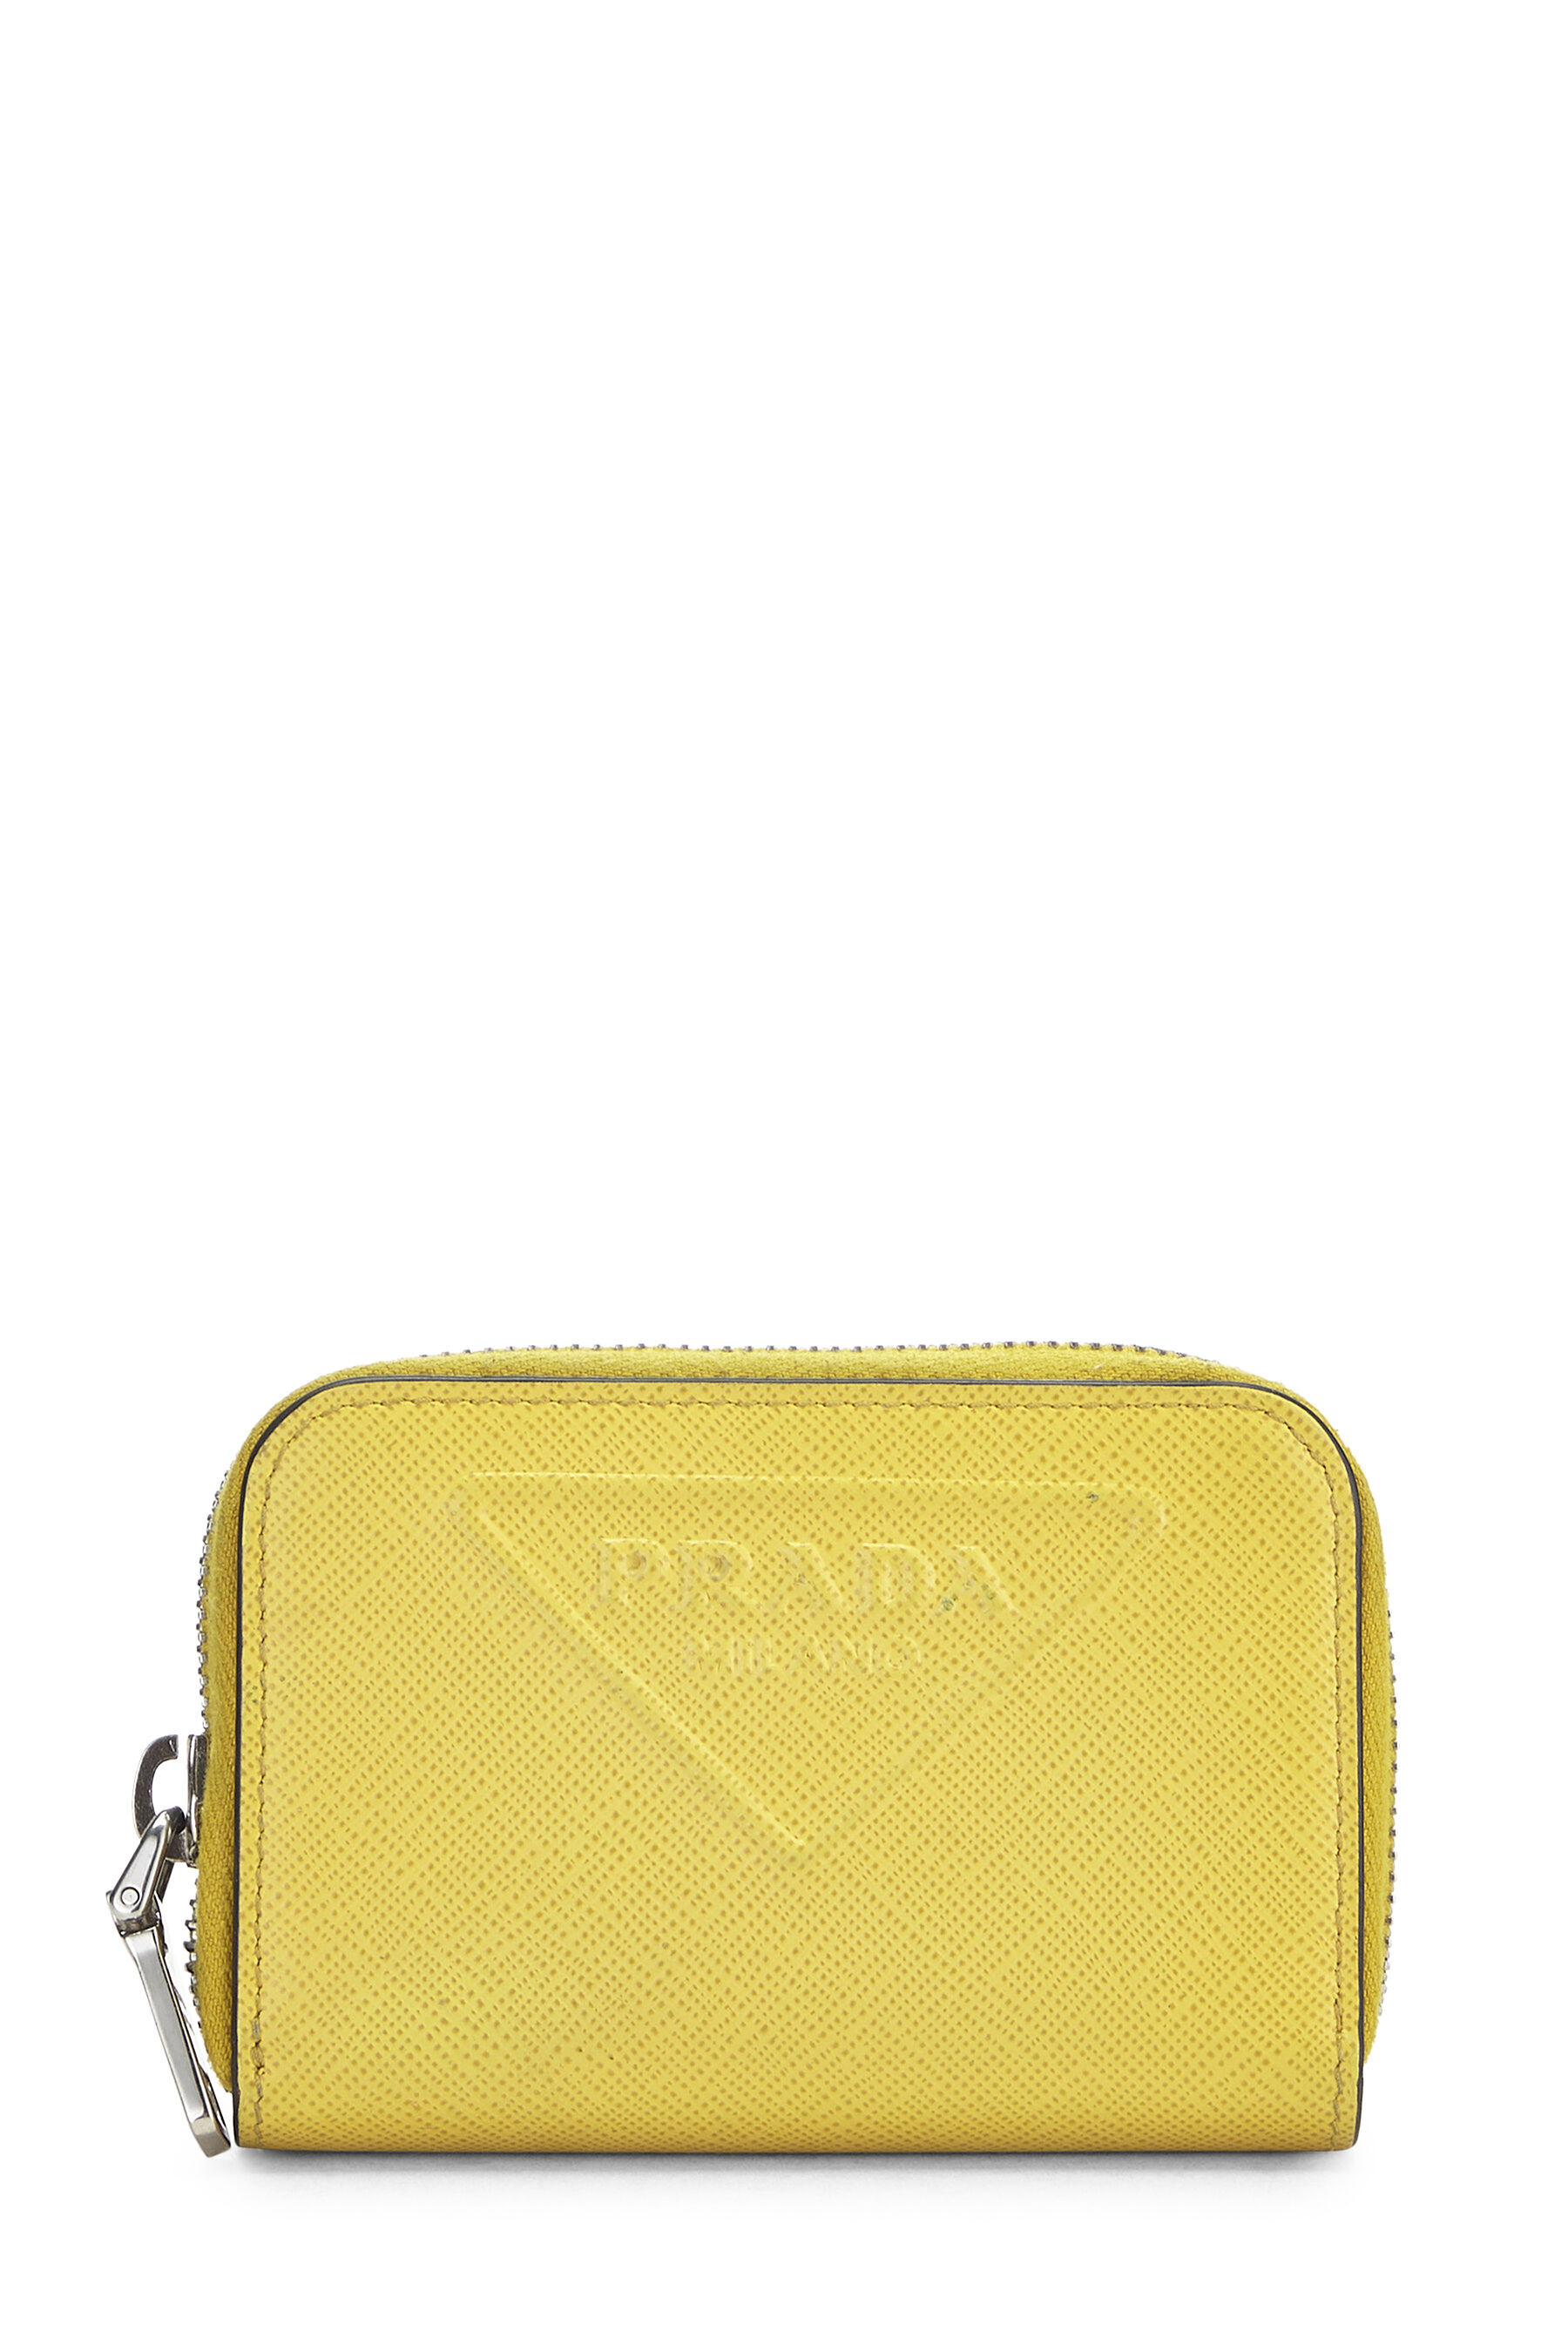 Prada Yellow Saffiano Zip Around Compact Wallet QNA3IG3RYB000 | WGACA